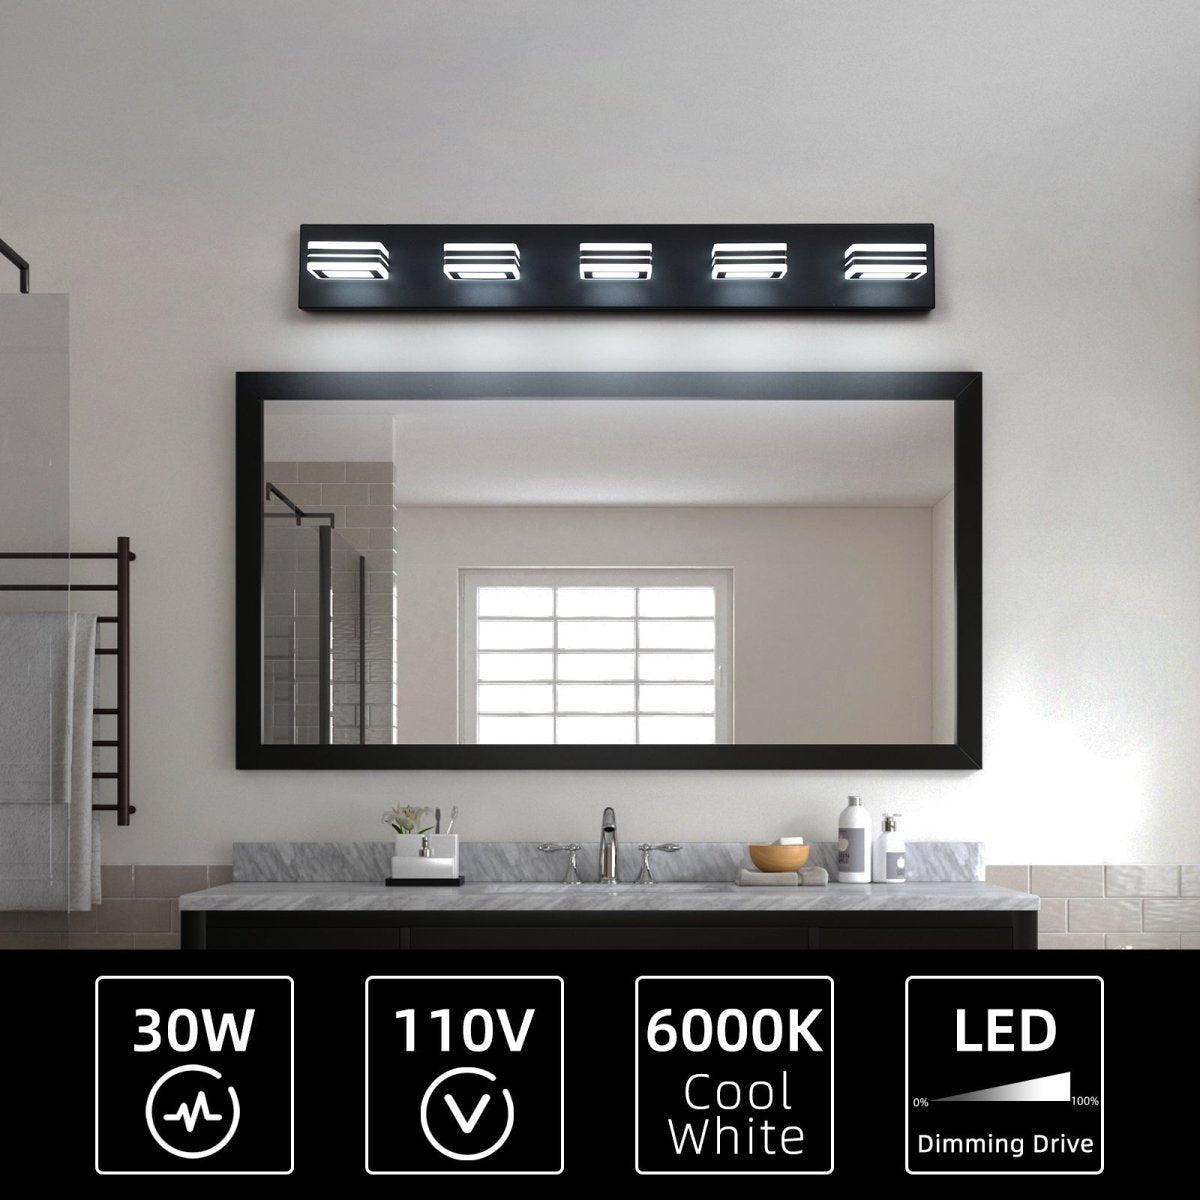 ExBrite 5-Light Bathroom Light Fixtures,LED Black Vanity Lights, Acrylic Matte Black Bathroom Vanity Lights,For Kitchen Living Room Hallway